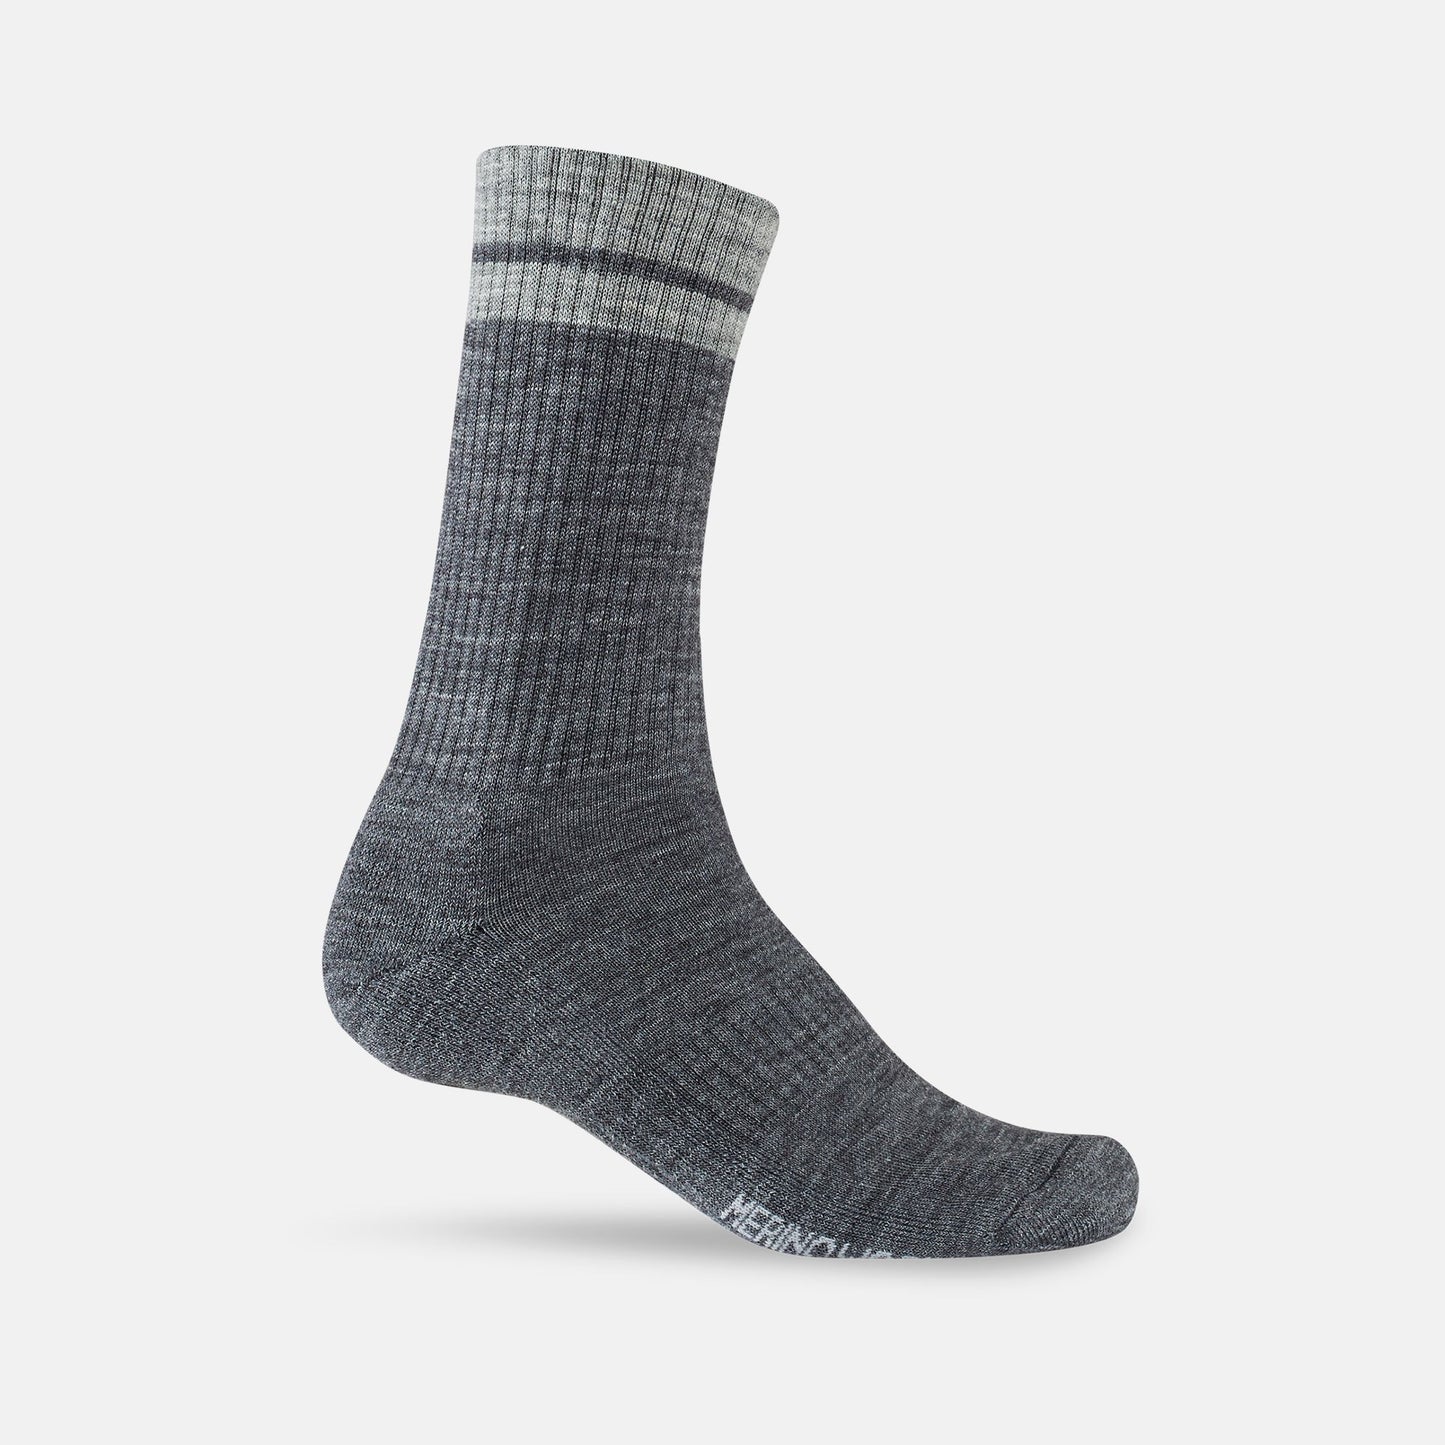 Giro Winter Merino Wool Socks - Charcoal - Size M